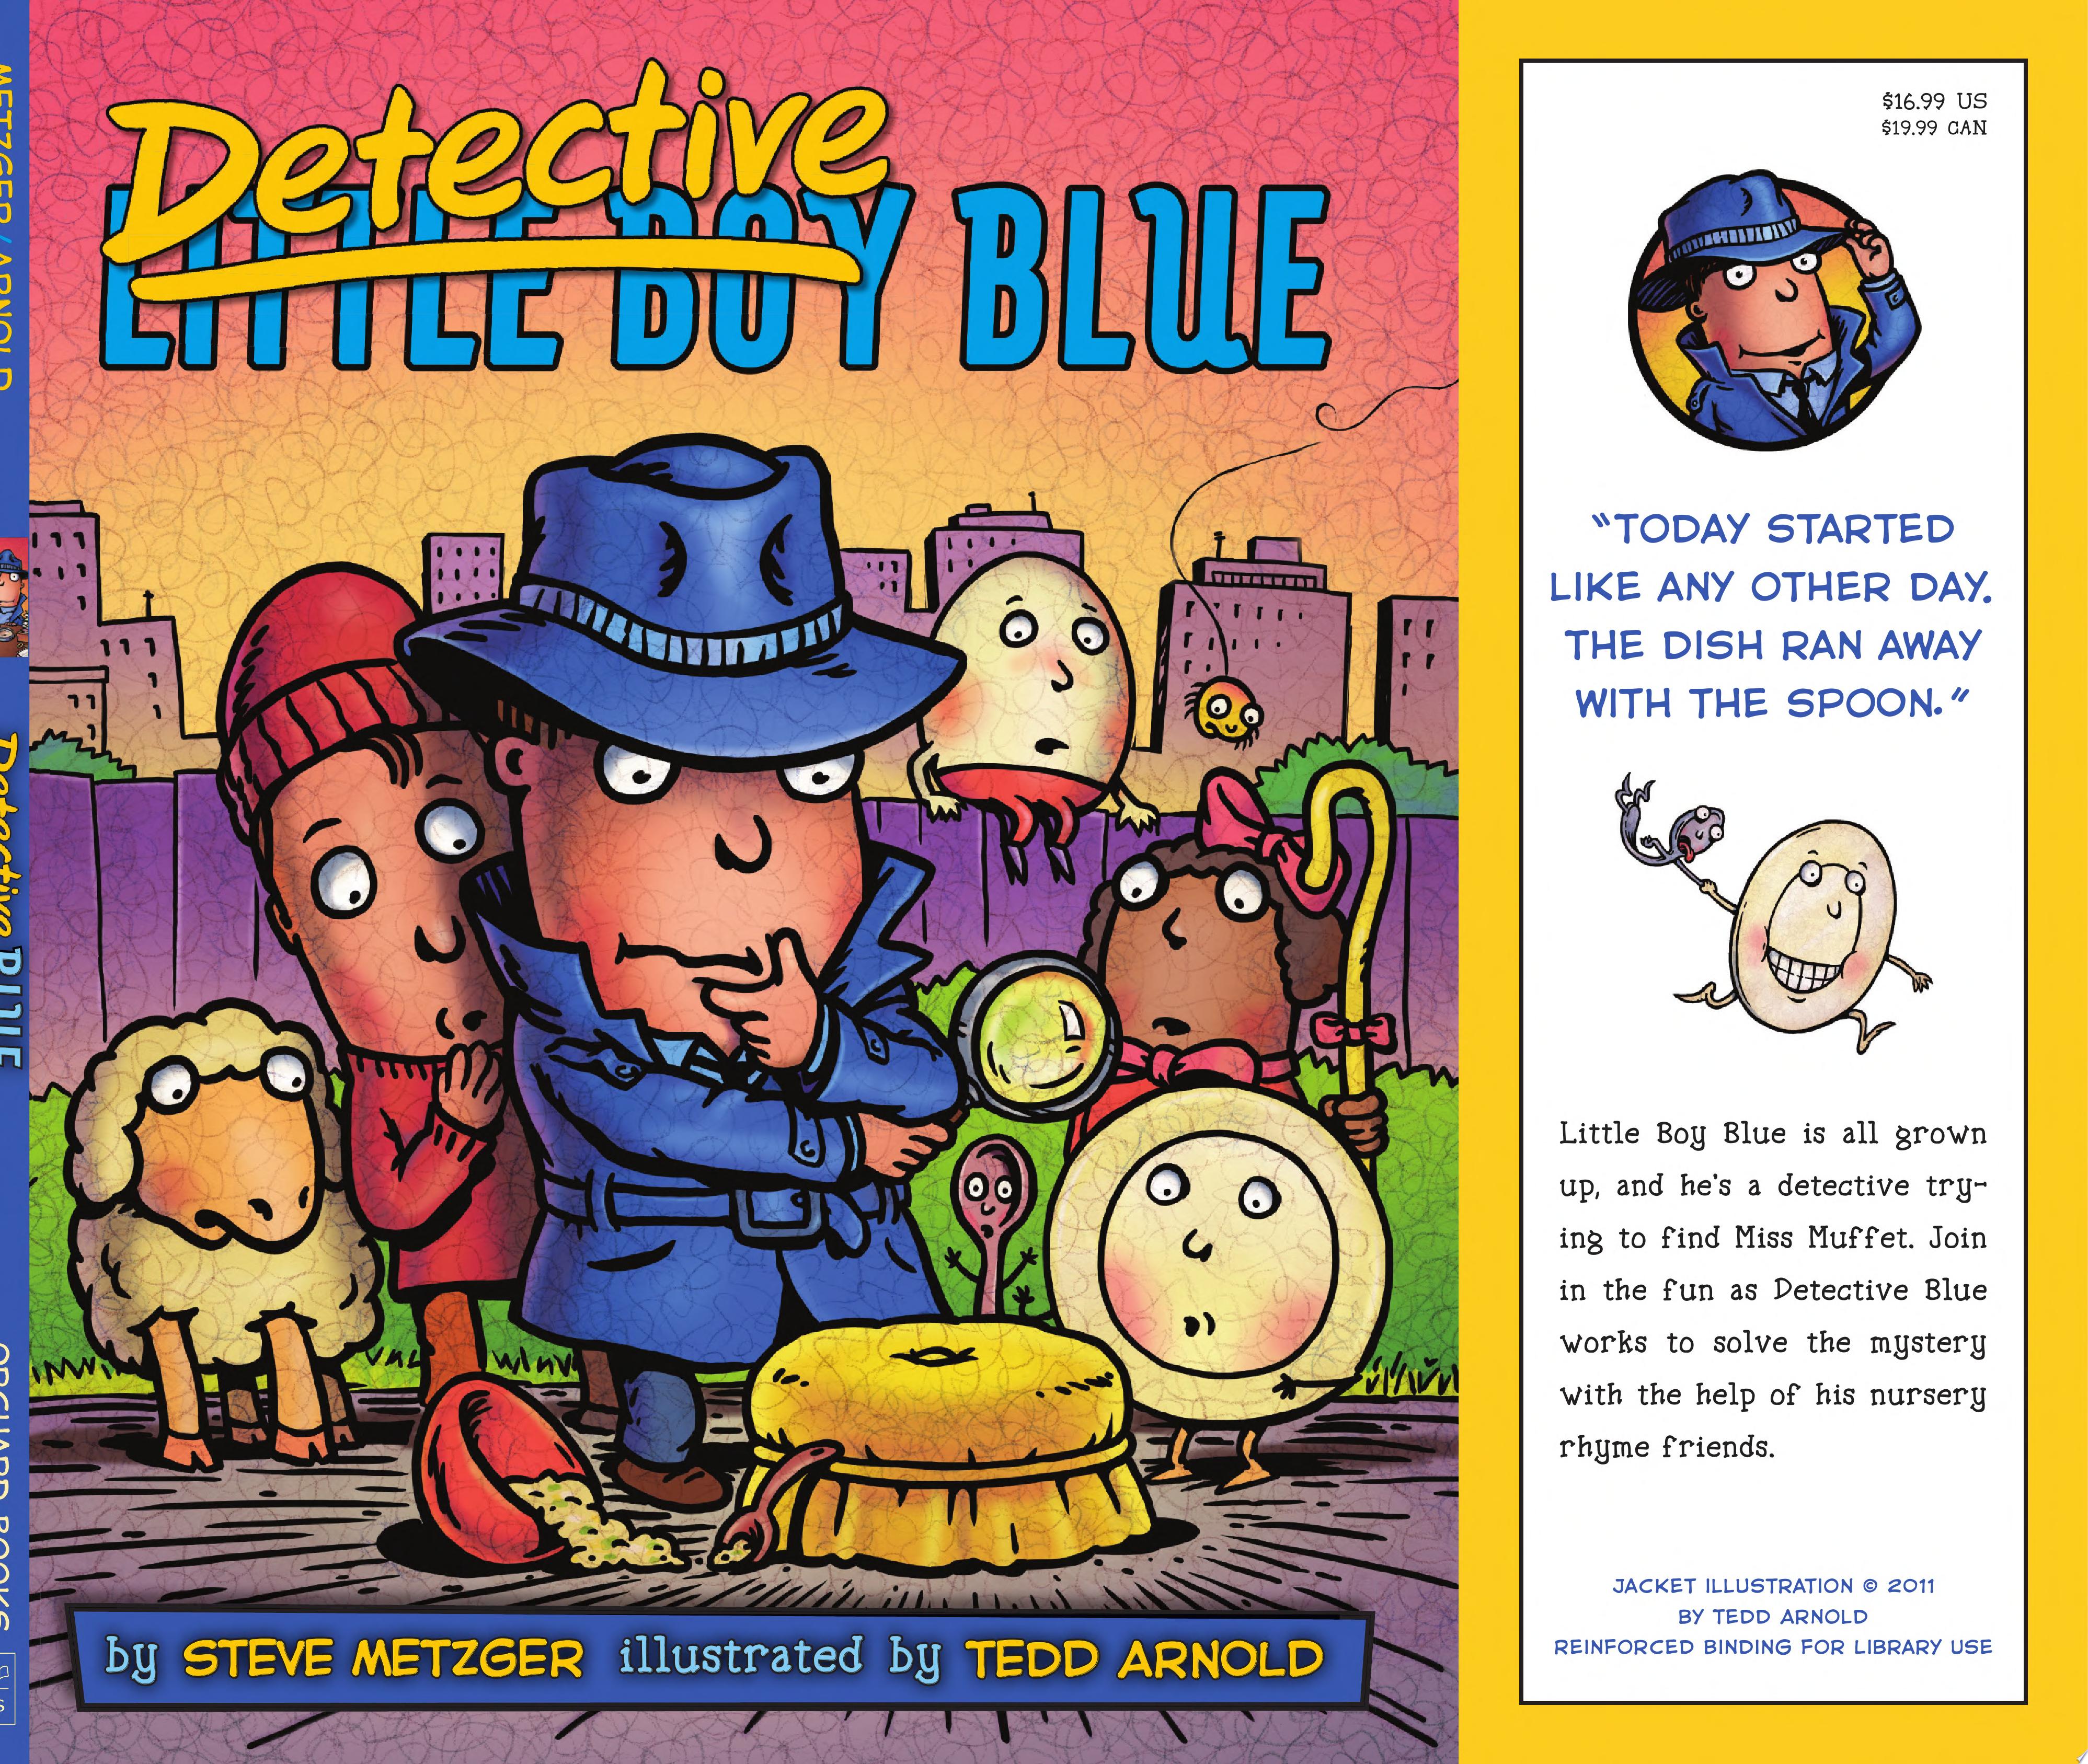 Image for "Detective Little Boy Blue"